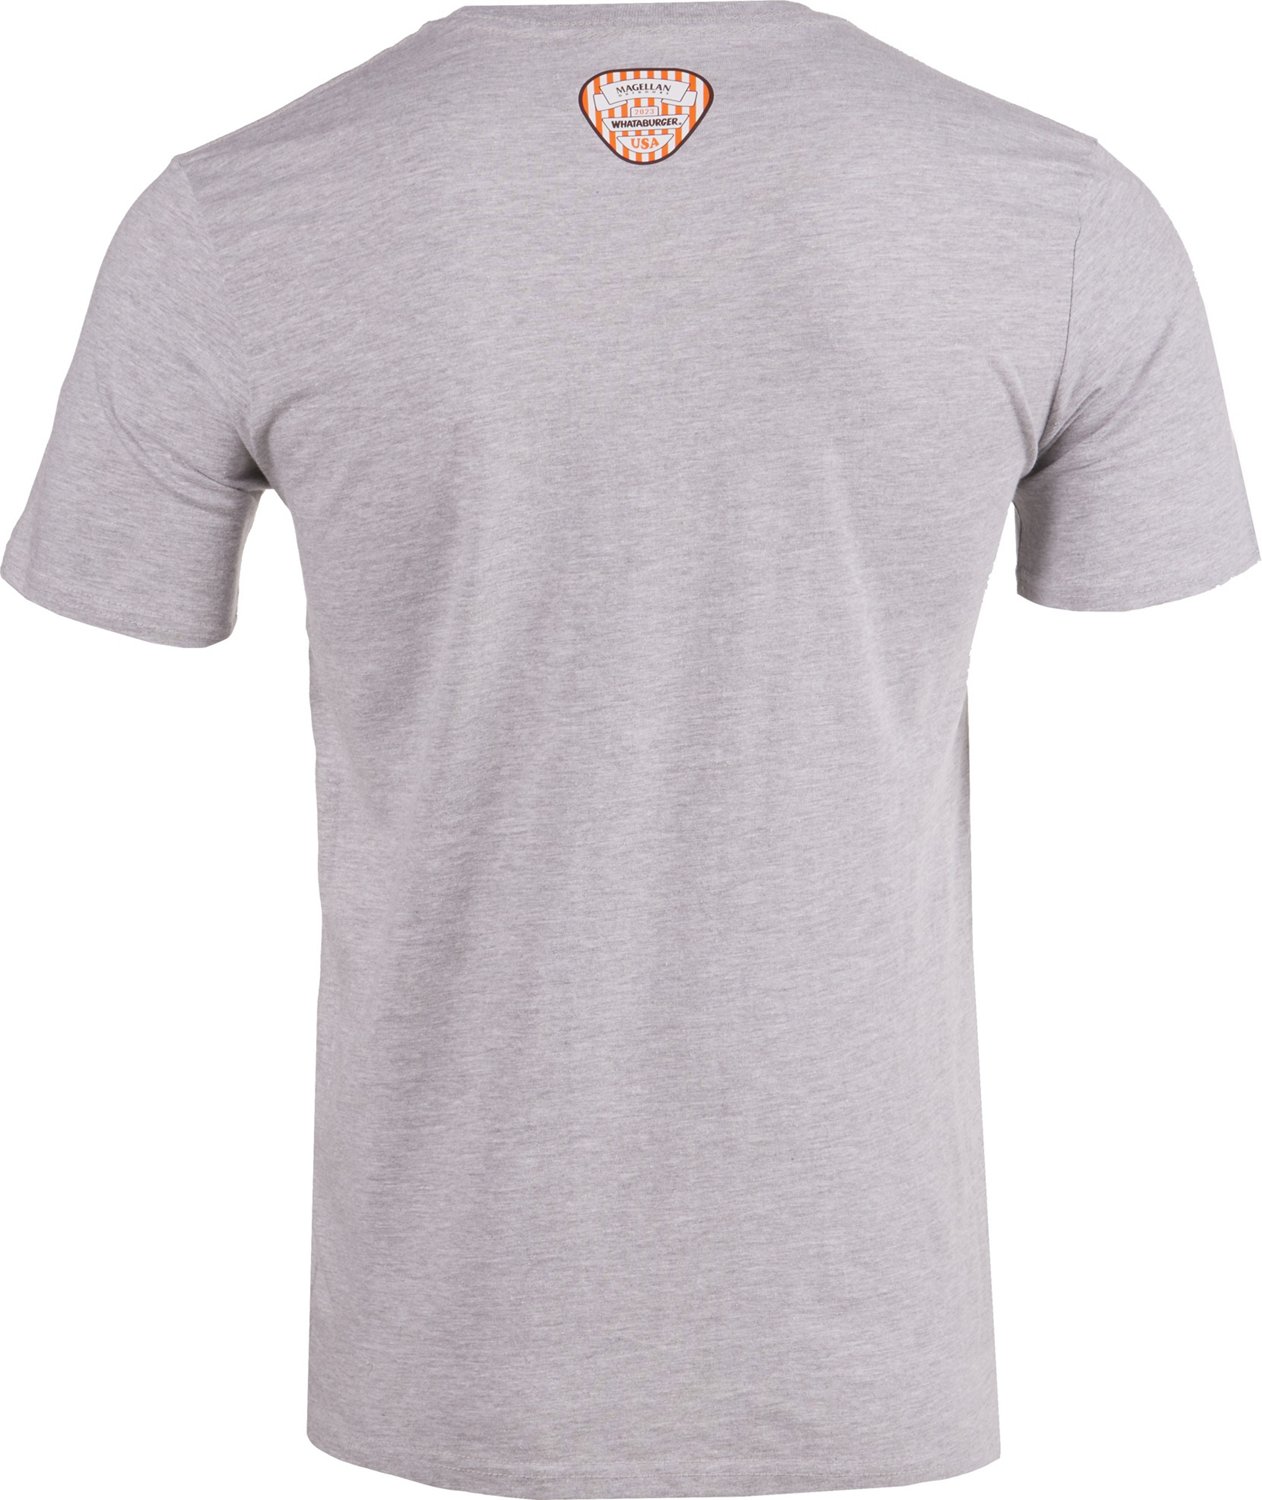 Magellan Outdoors Men's Whataburger Chosen T-shirt